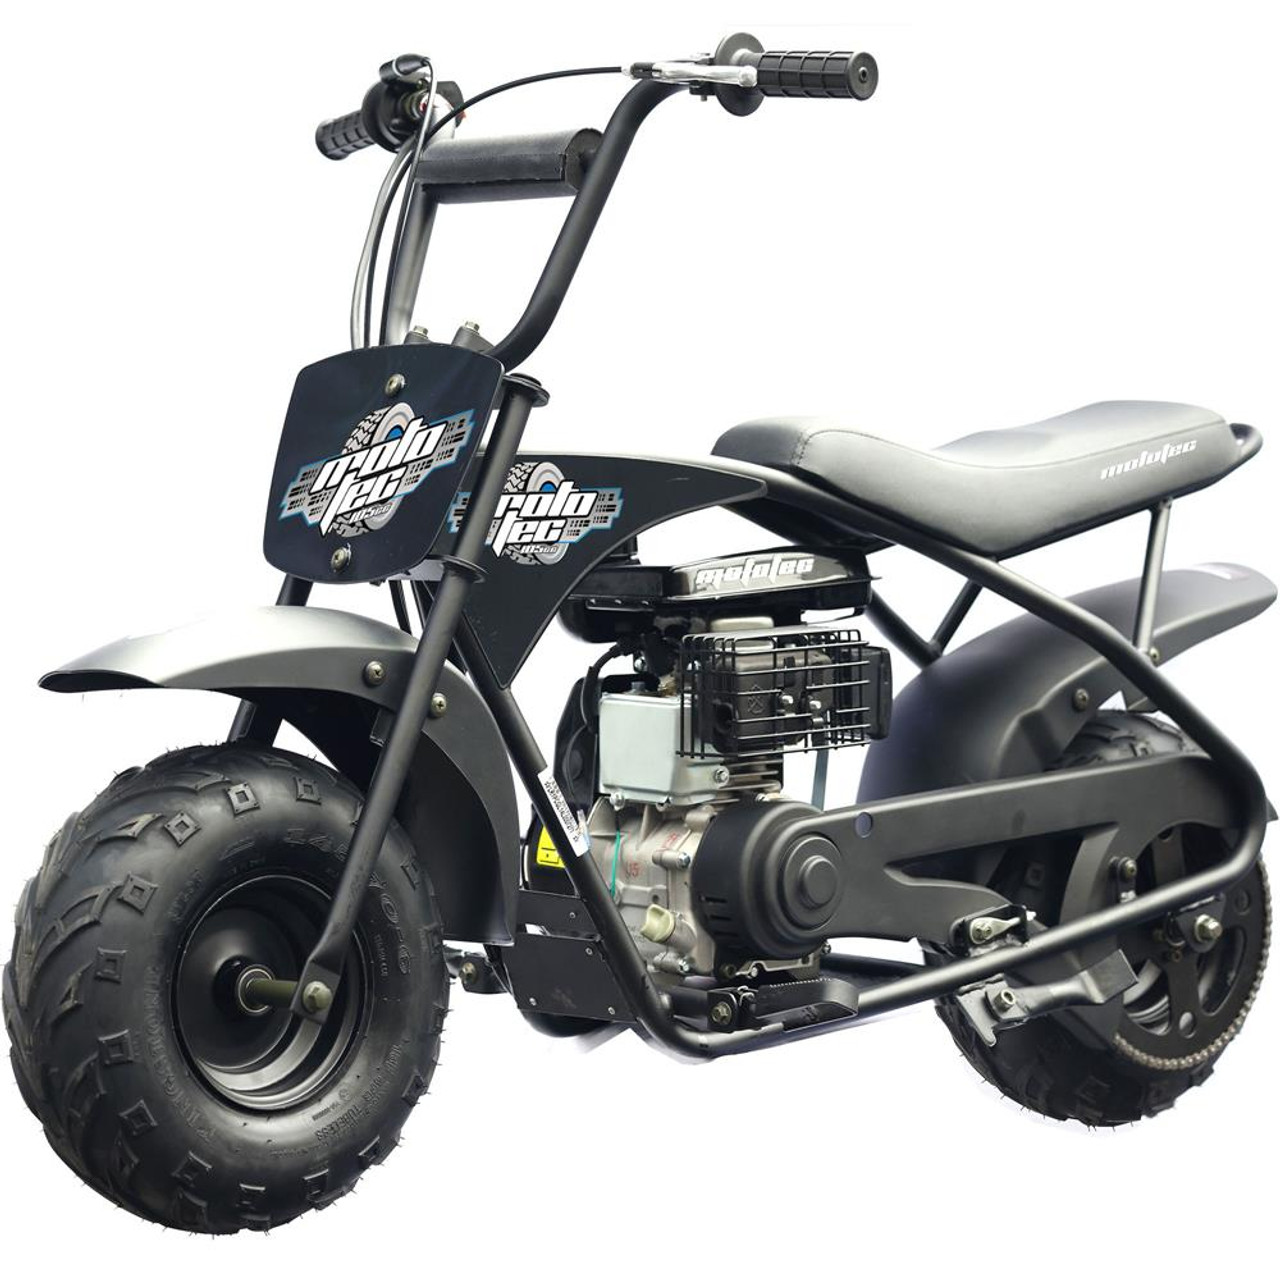 50cc pocket bike : r/minibikes